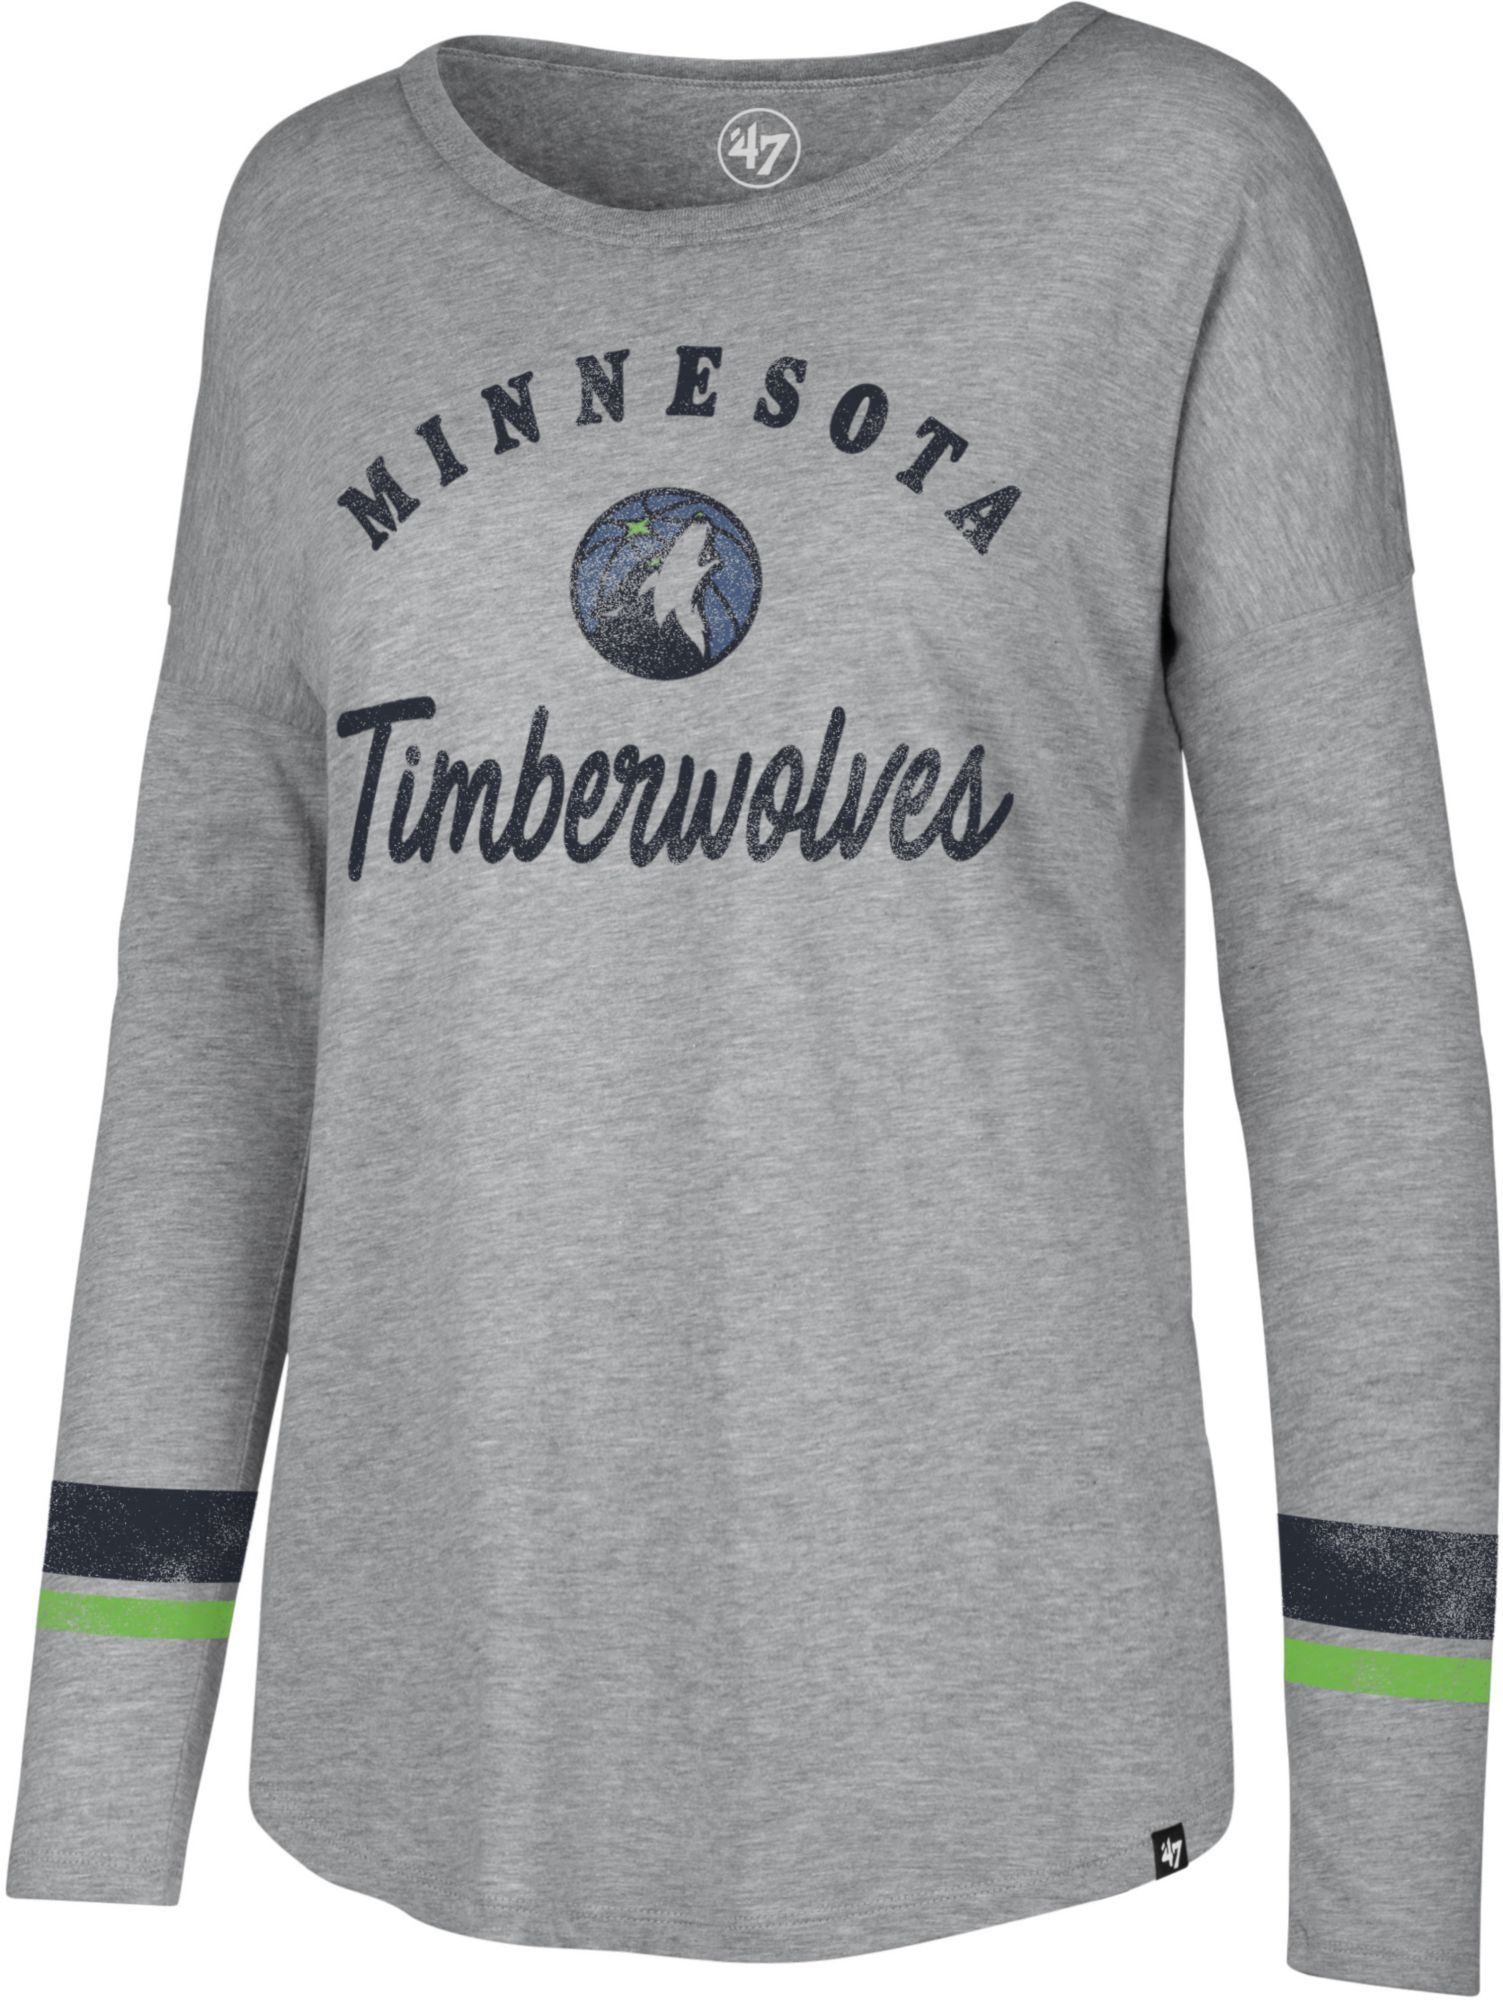 Minnesota Timberwolves Women's Apparel 